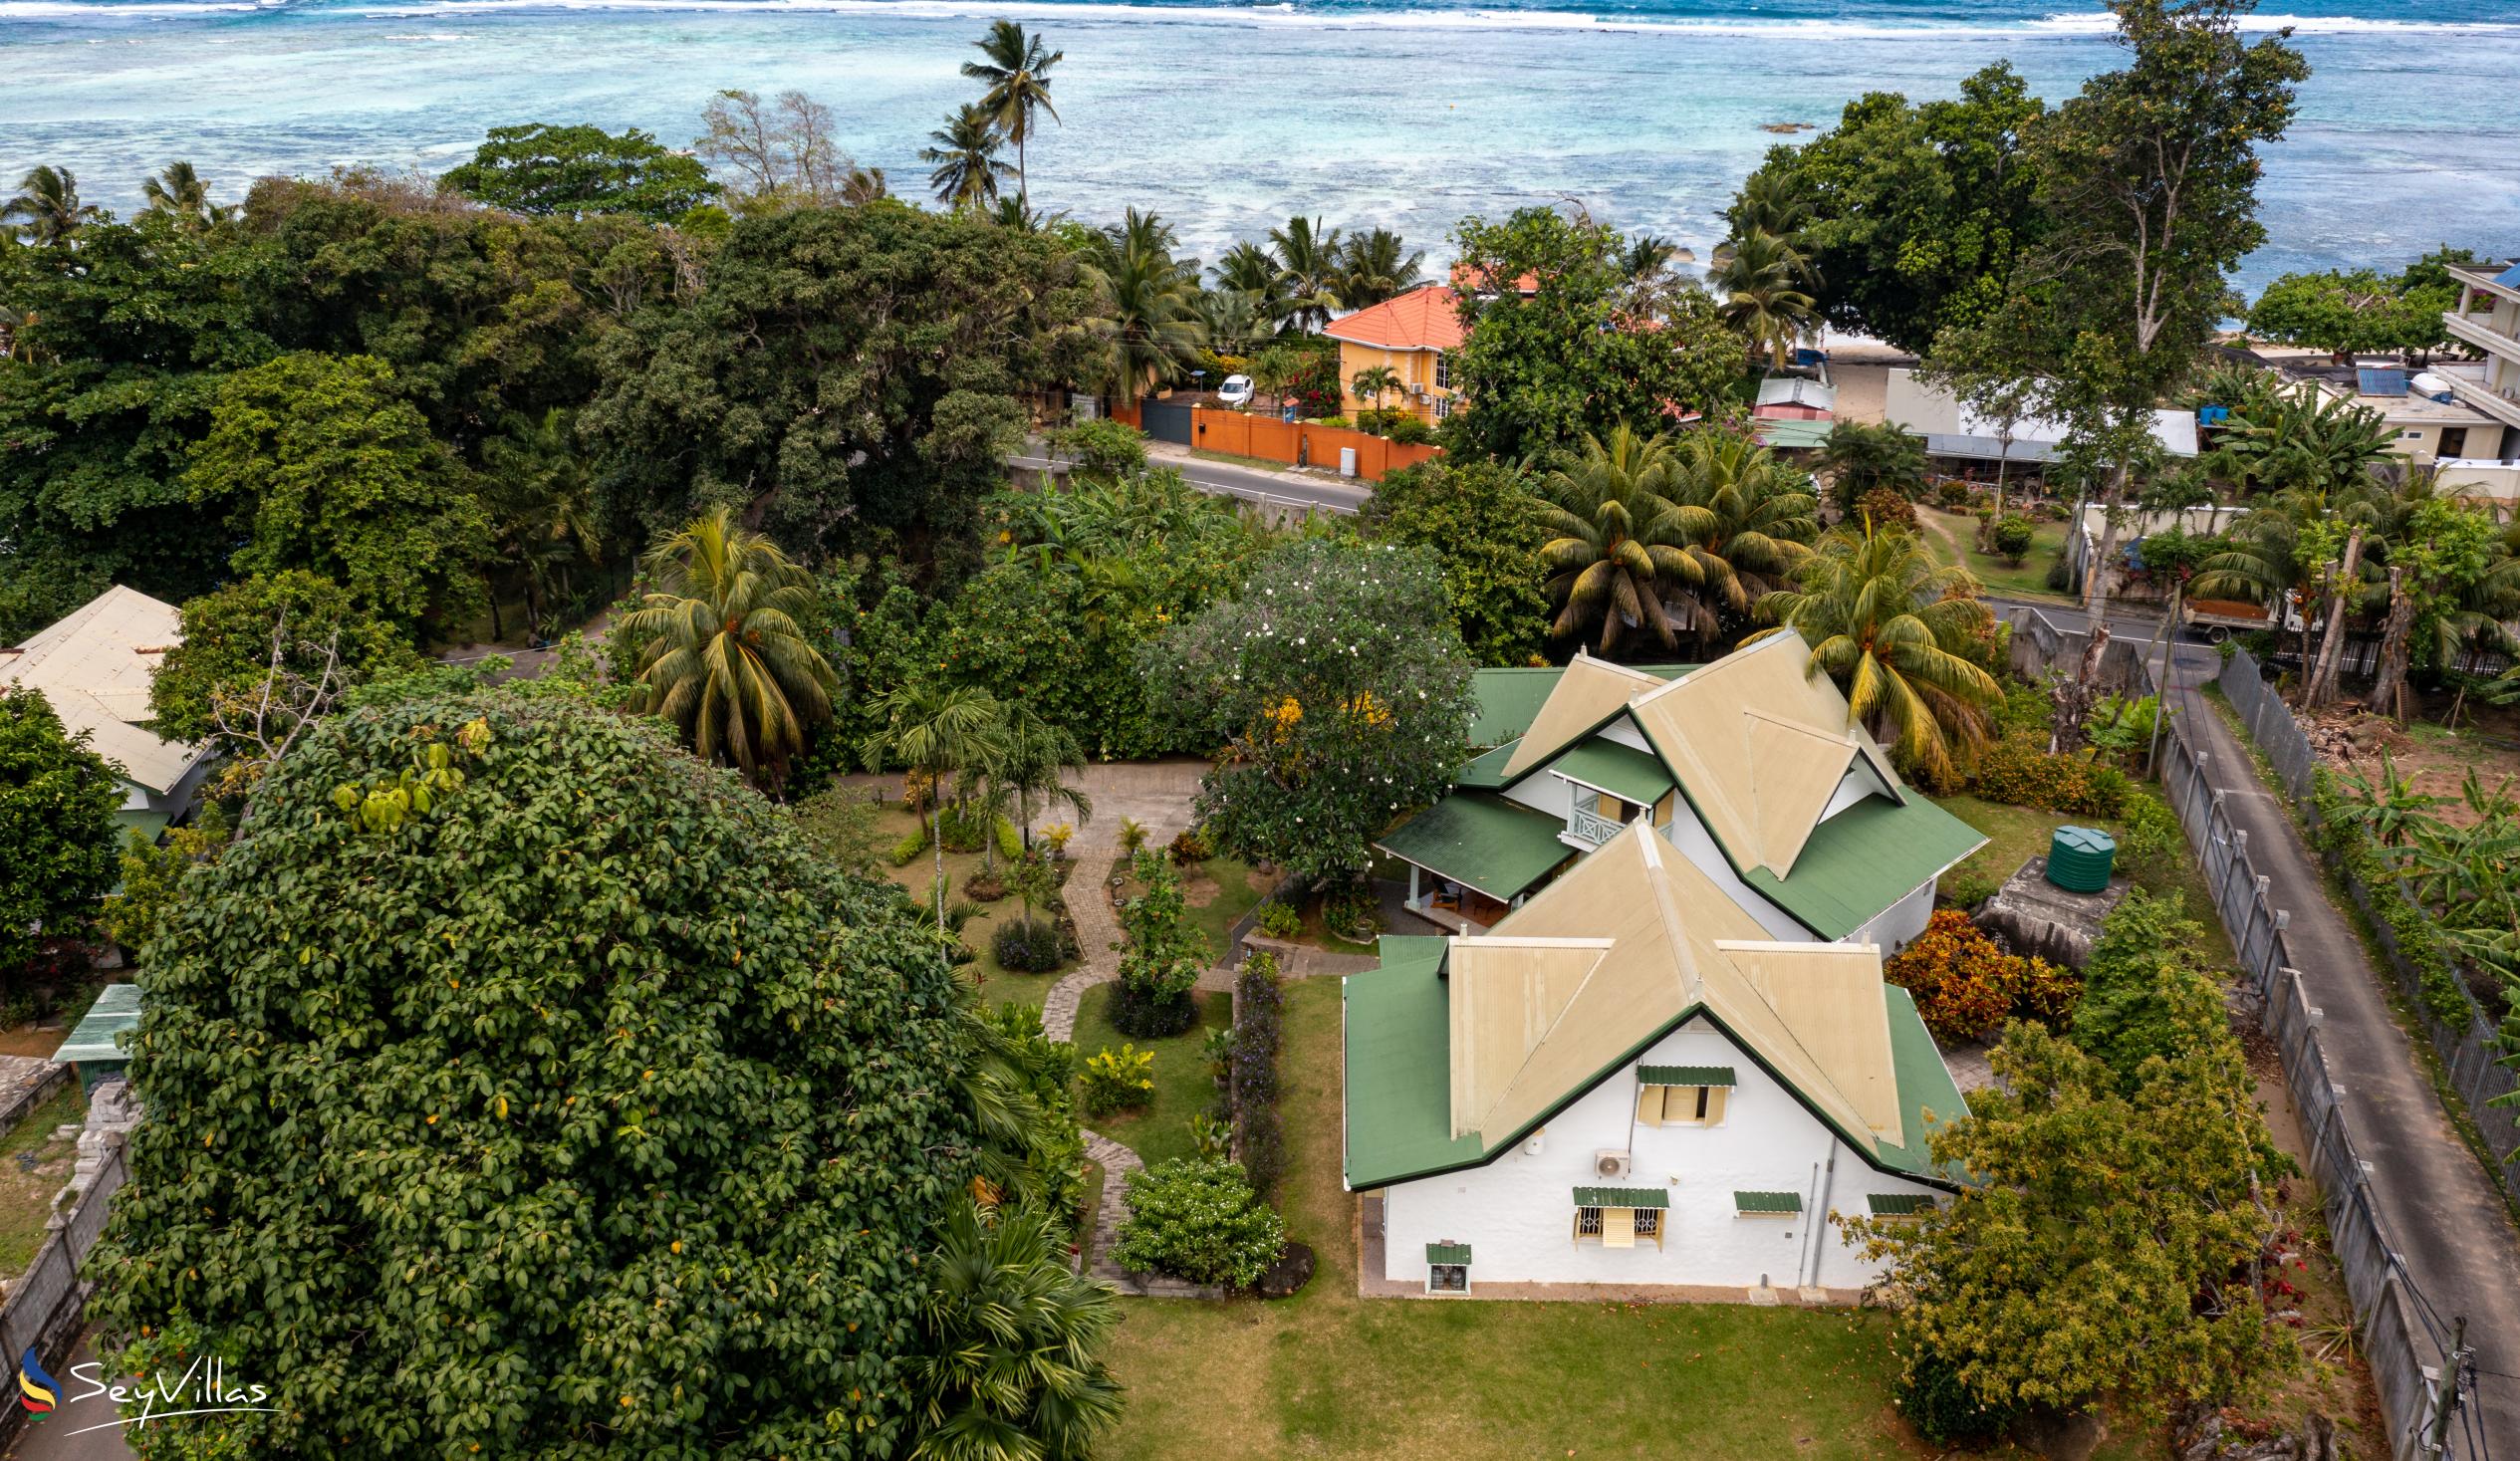 Photo 2: Villa Kordia - Outdoor area - Mahé (Seychelles)